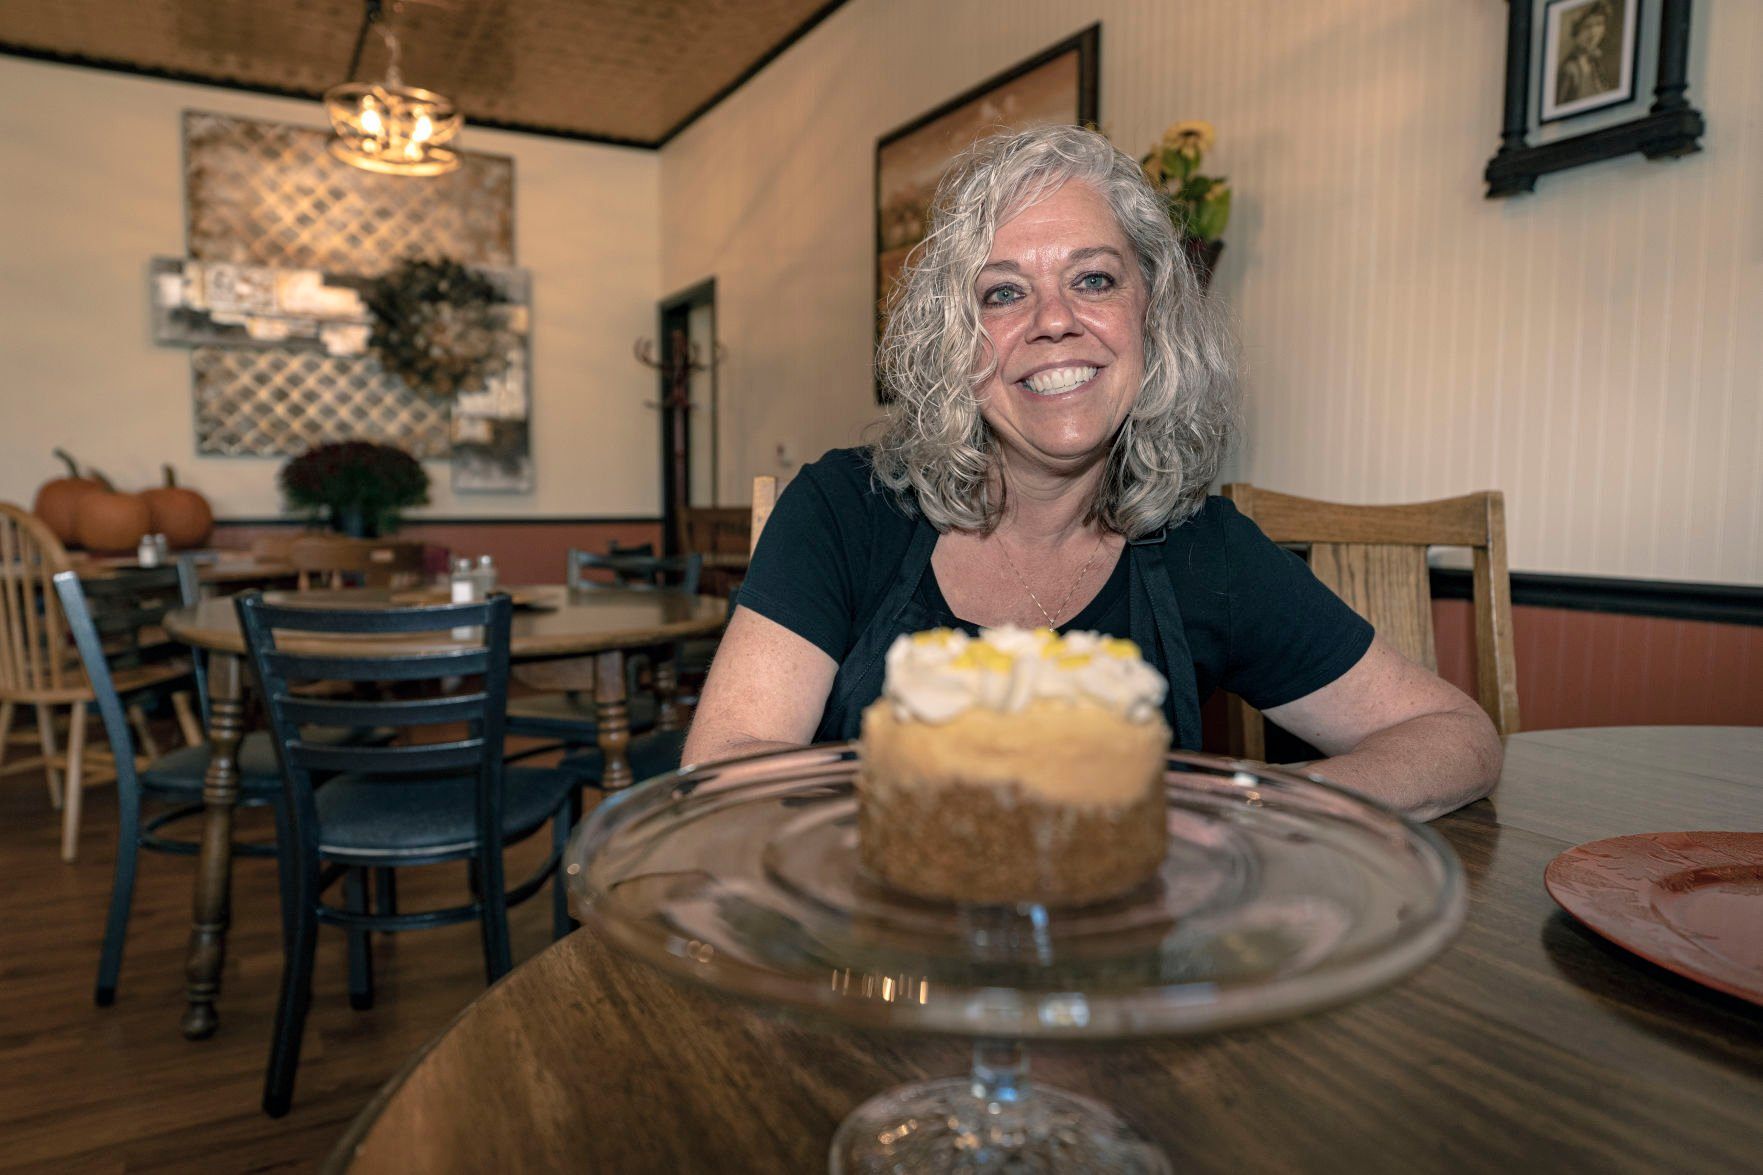 Kelli Kerrigan shows a homemade cheesecake at Kelli’s Place on Main Street in Benton, Wis.    PHOTO CREDIT: Thomas Eckermann